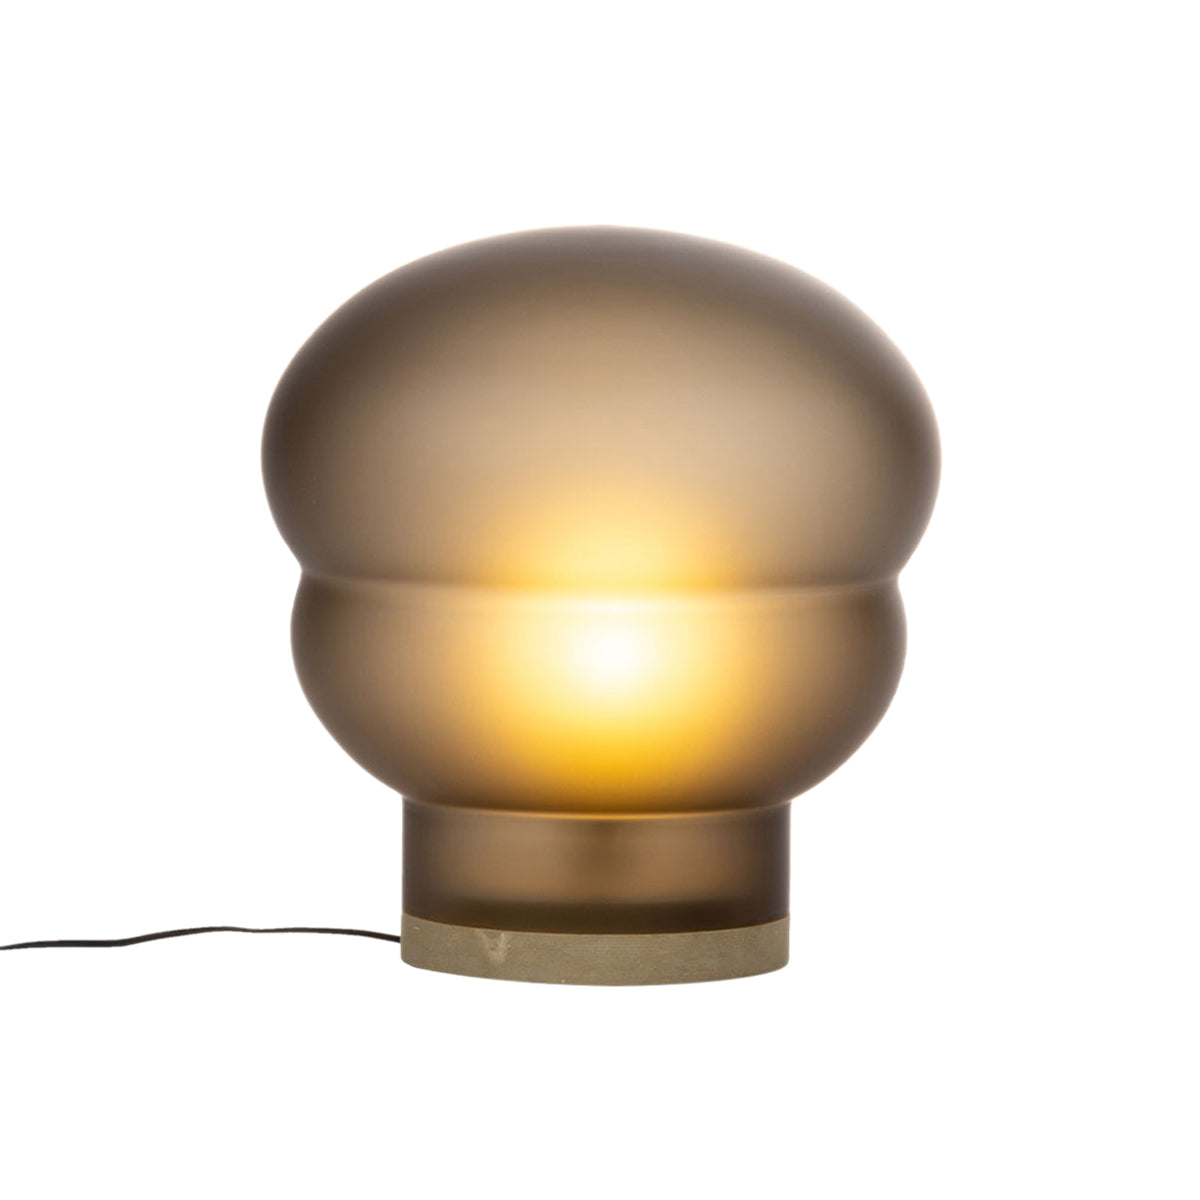 Kumo Floor Lamp: Medium - 17.7